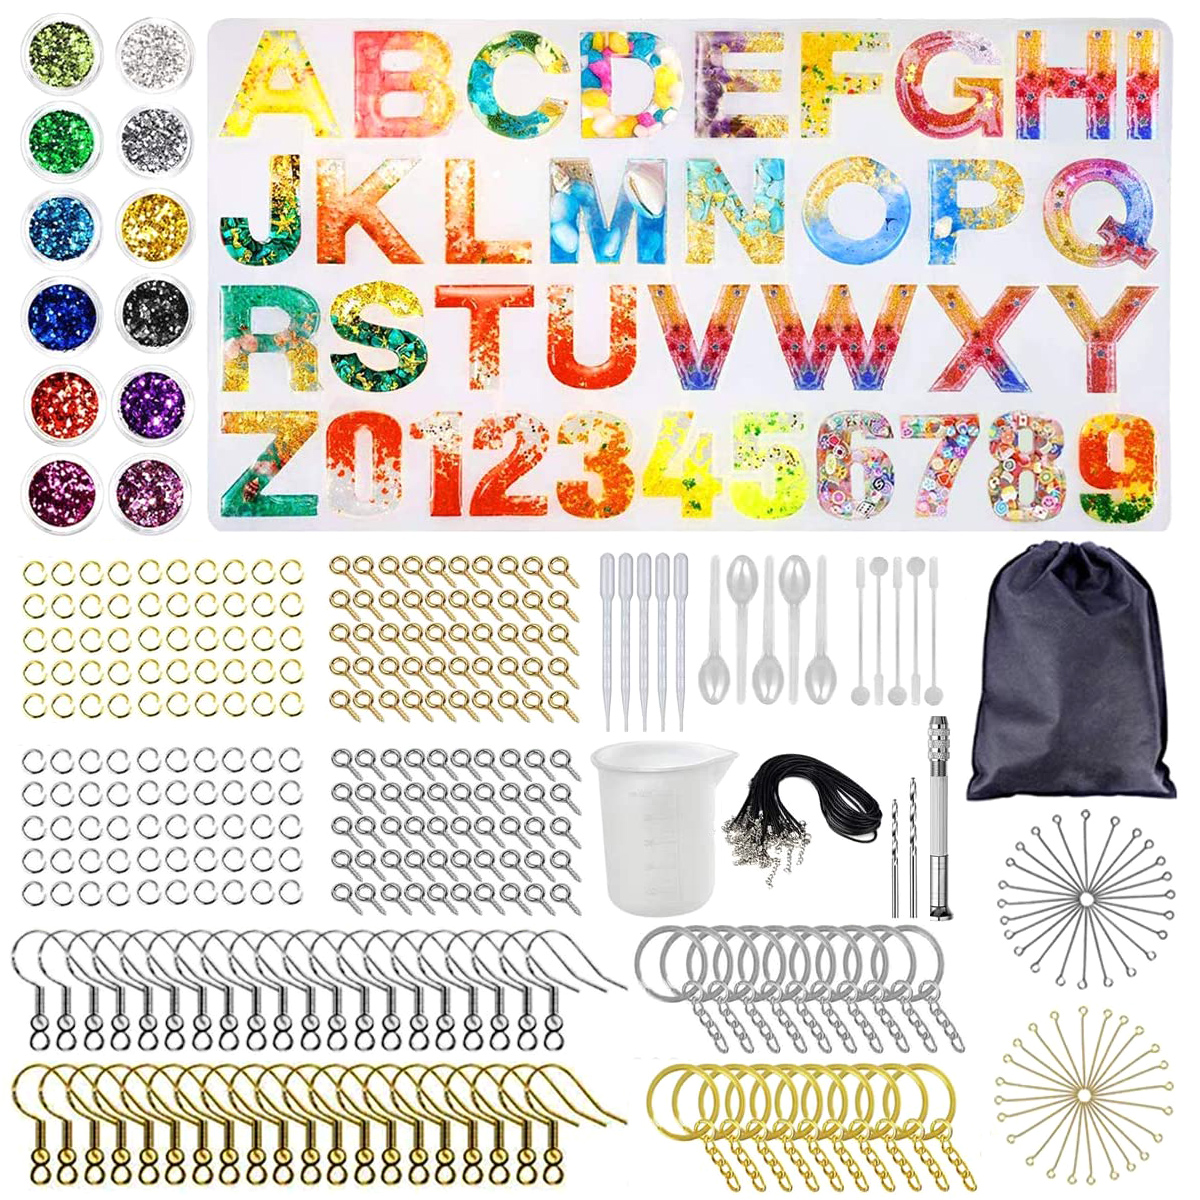 353Pcs Letter Number Silicone Mold Kit Alphabet Resin Casting